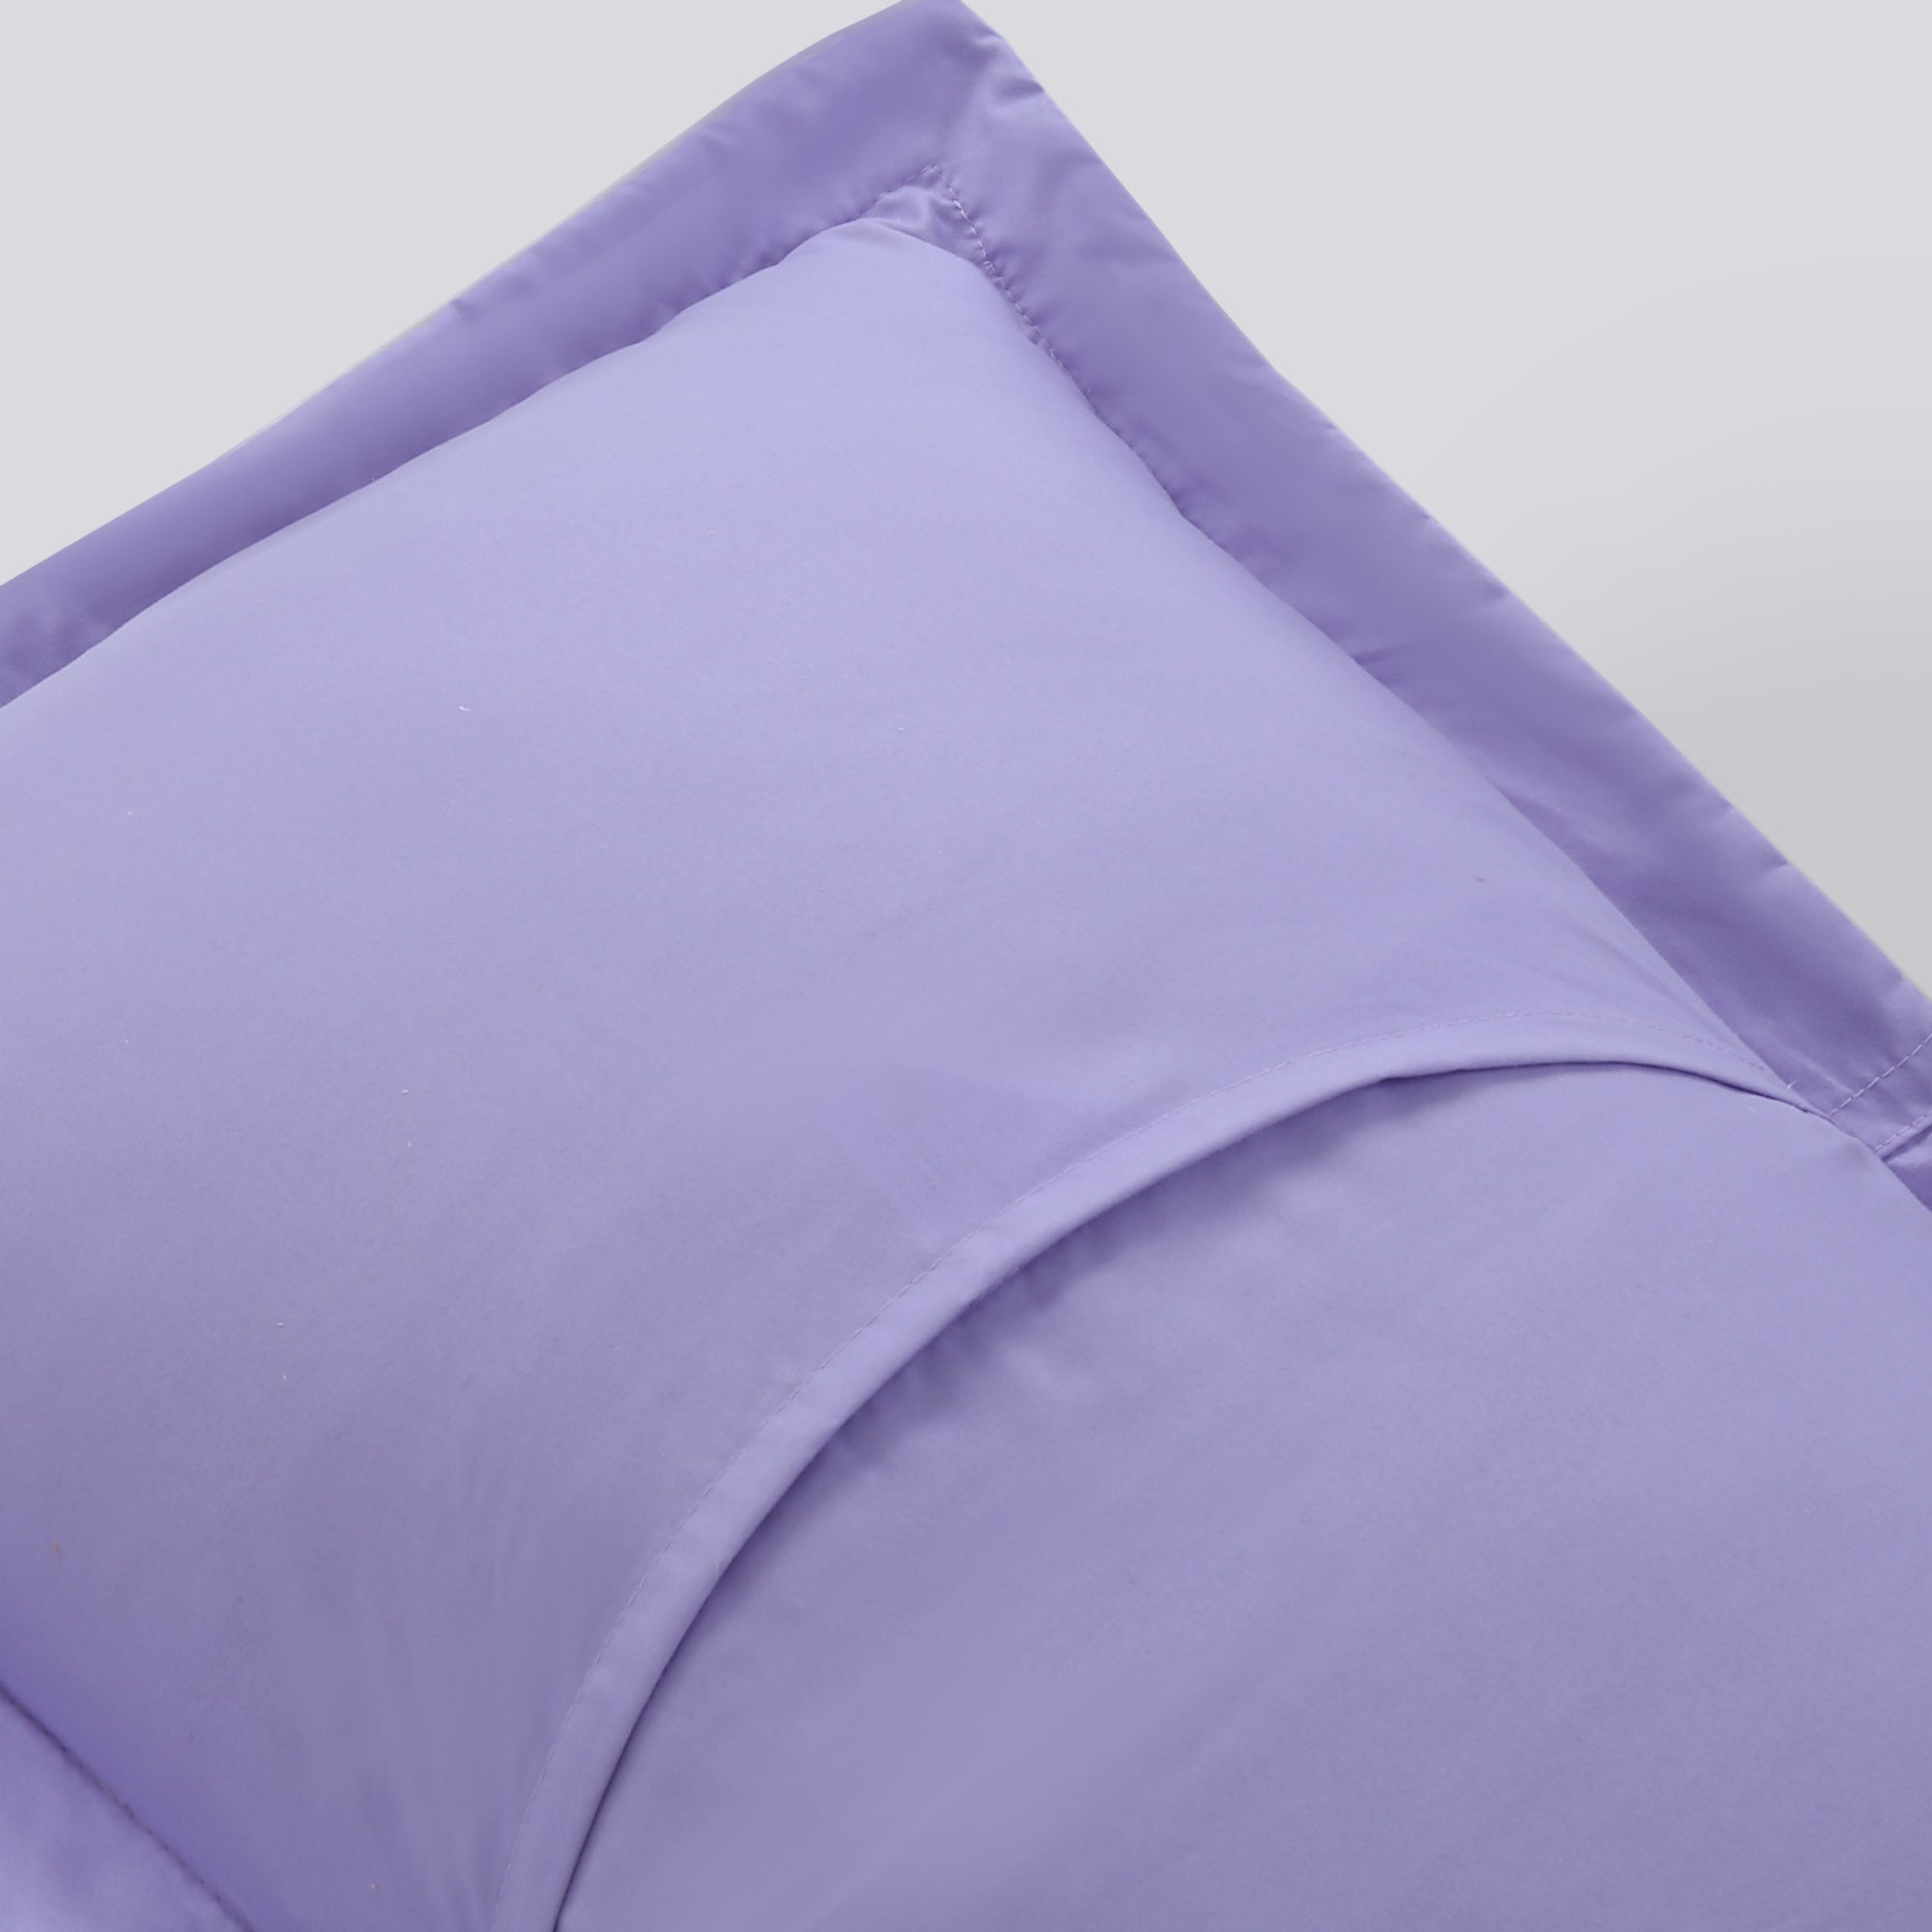 2-Piece Embroidered Pillow Shams, Queen Decorative Microfiber Pillow Shams Set Standard Size